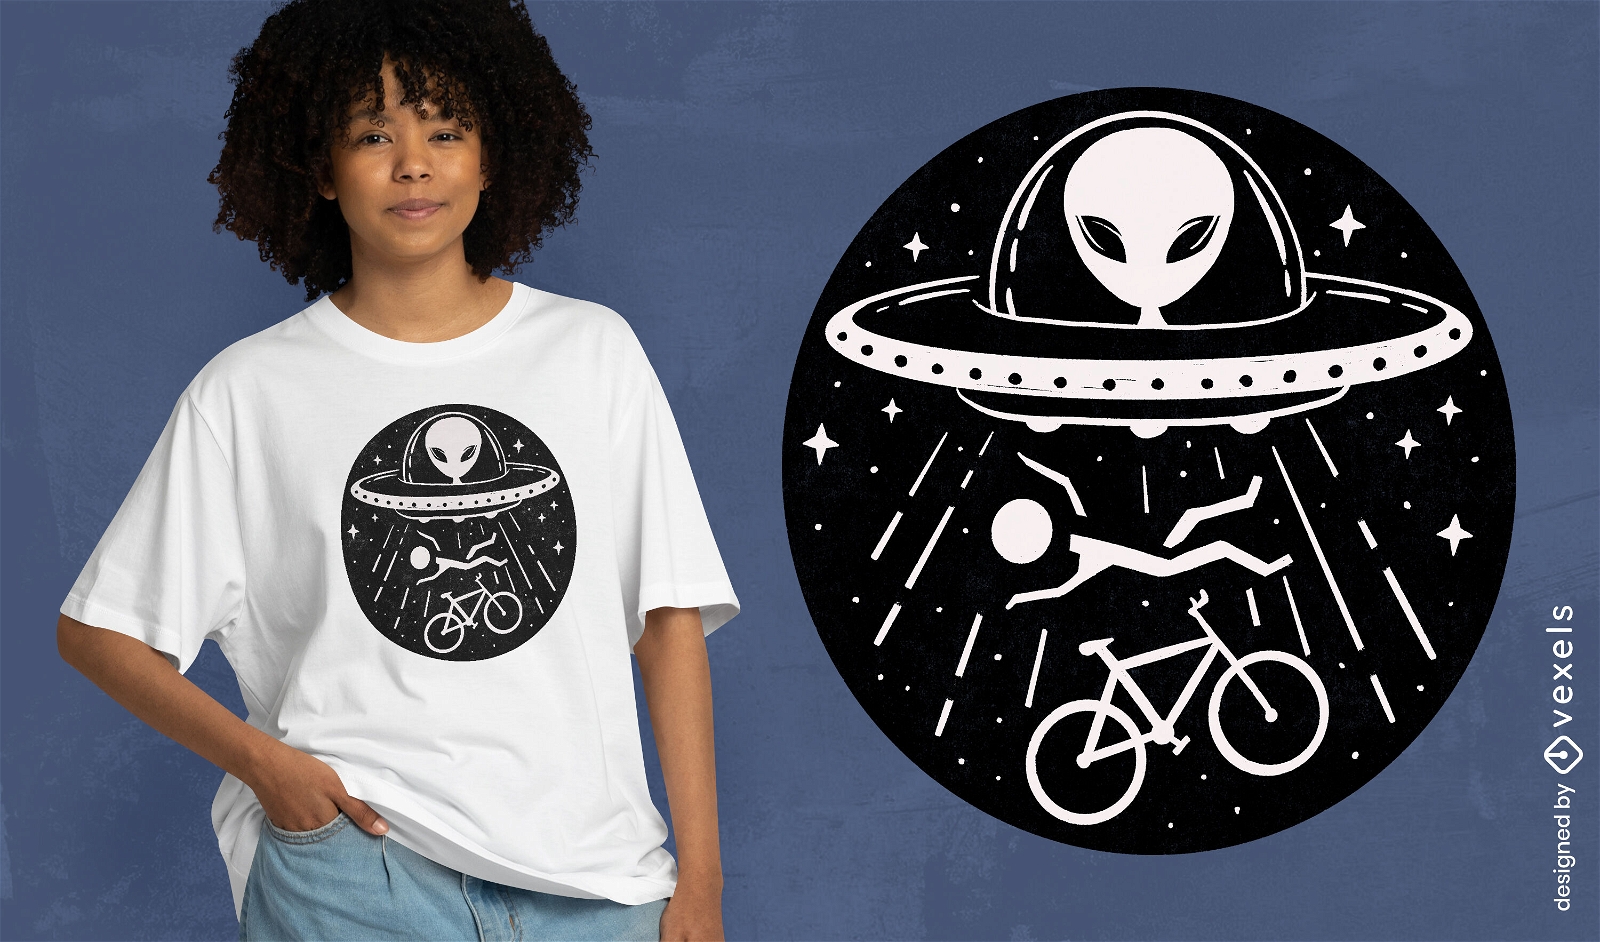 Dise?o de camiseta de nave espacial de abducci?n extraterrestre.